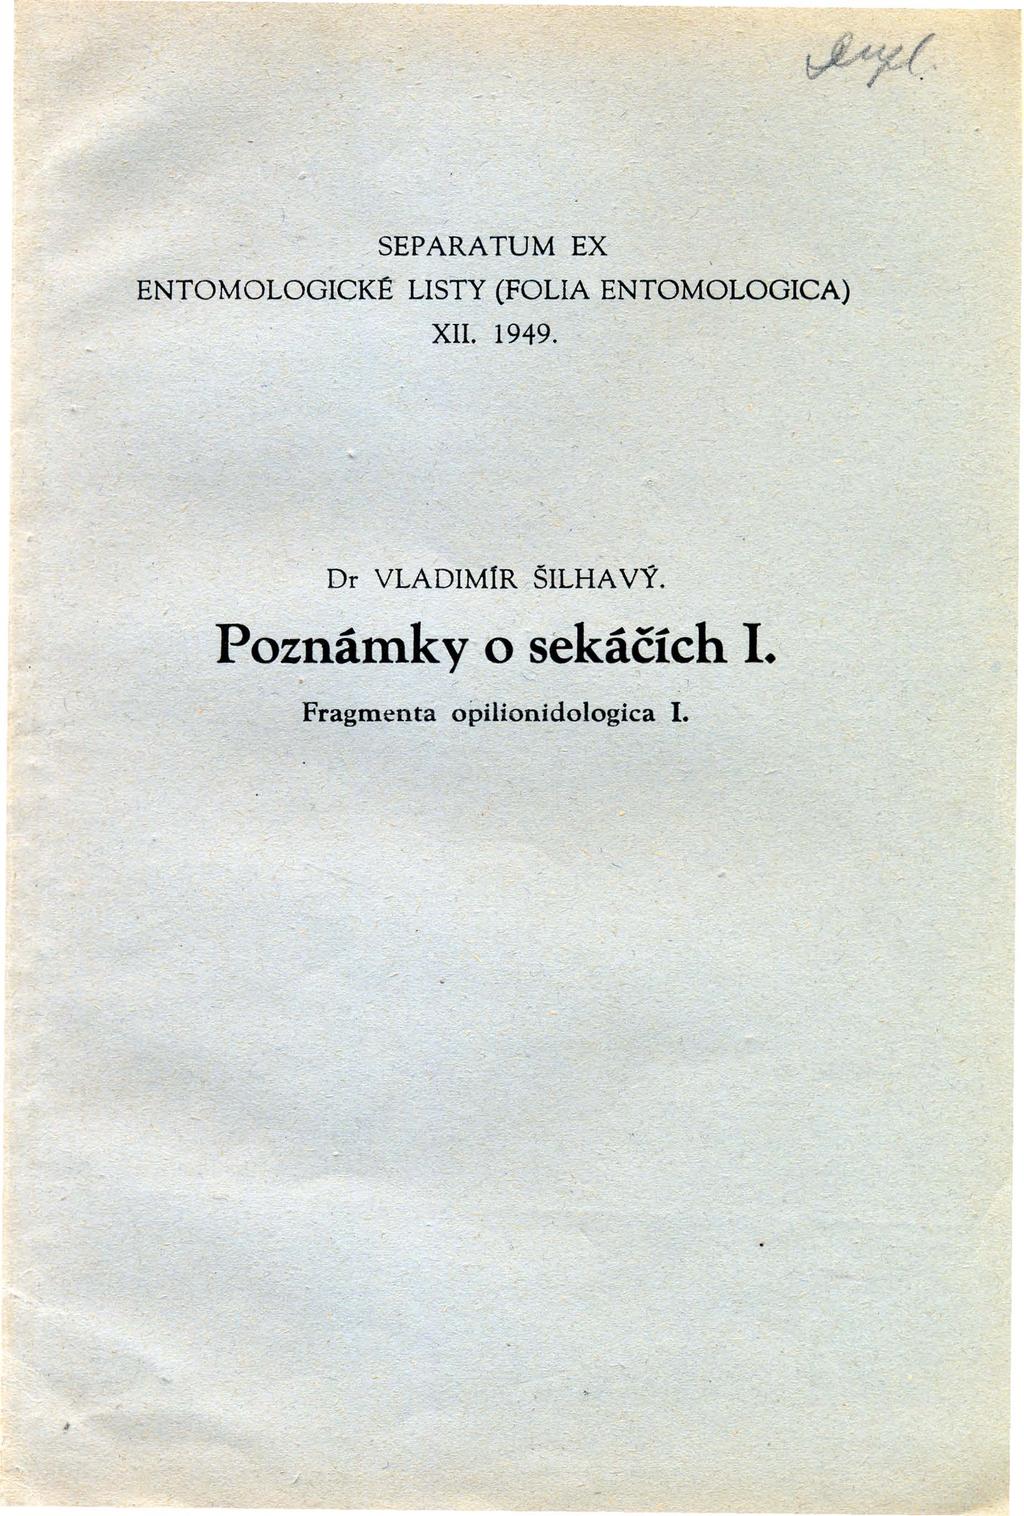 SEPARA TUM EX ENTOMOLOGICKE LISTY (FOLIA ENTOMOLOGICA) XII. 1949.